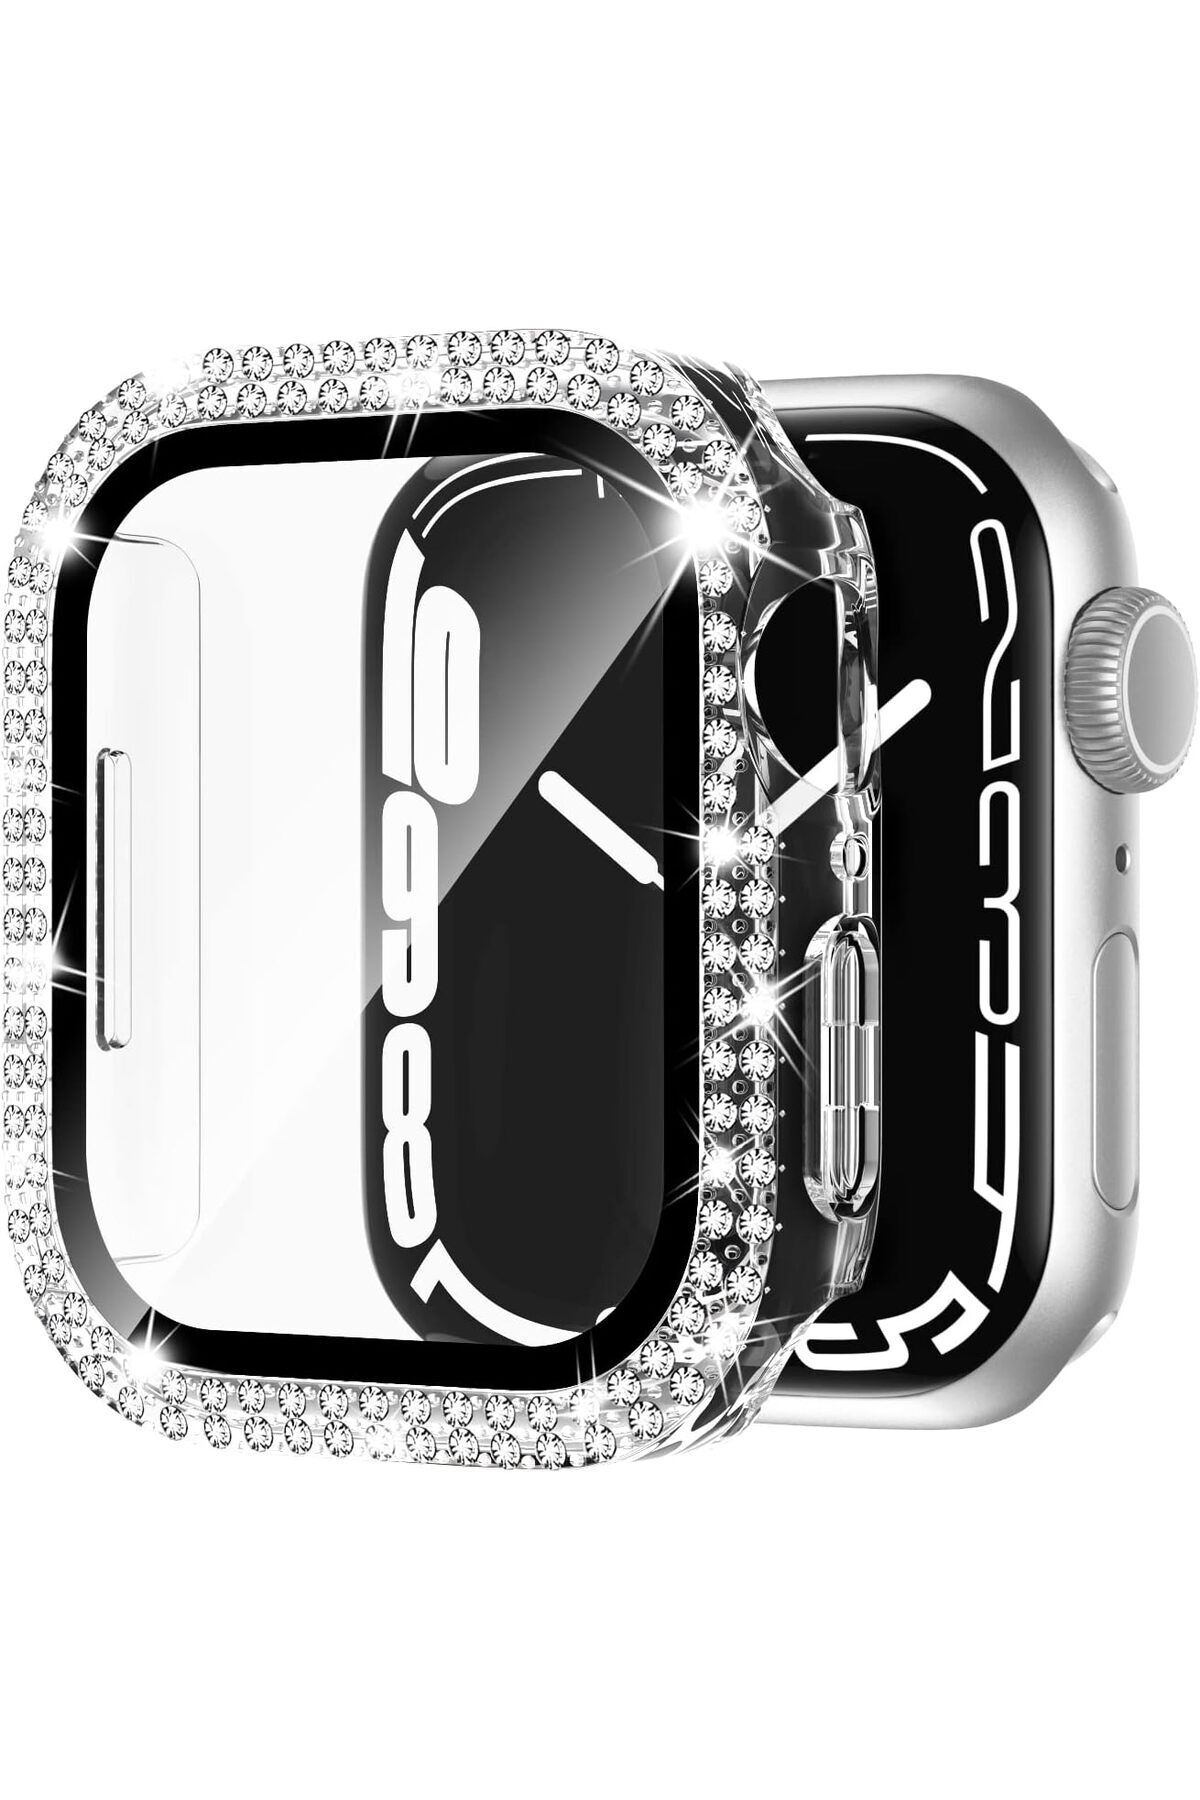 W wopiece Apple Watch 1 2 3 4 5 6 7 8 9 Se Serisi Uyum 41mm Taşlı DİAMOND 360 Tam Koruma Şeffaf Silikon Kılıf